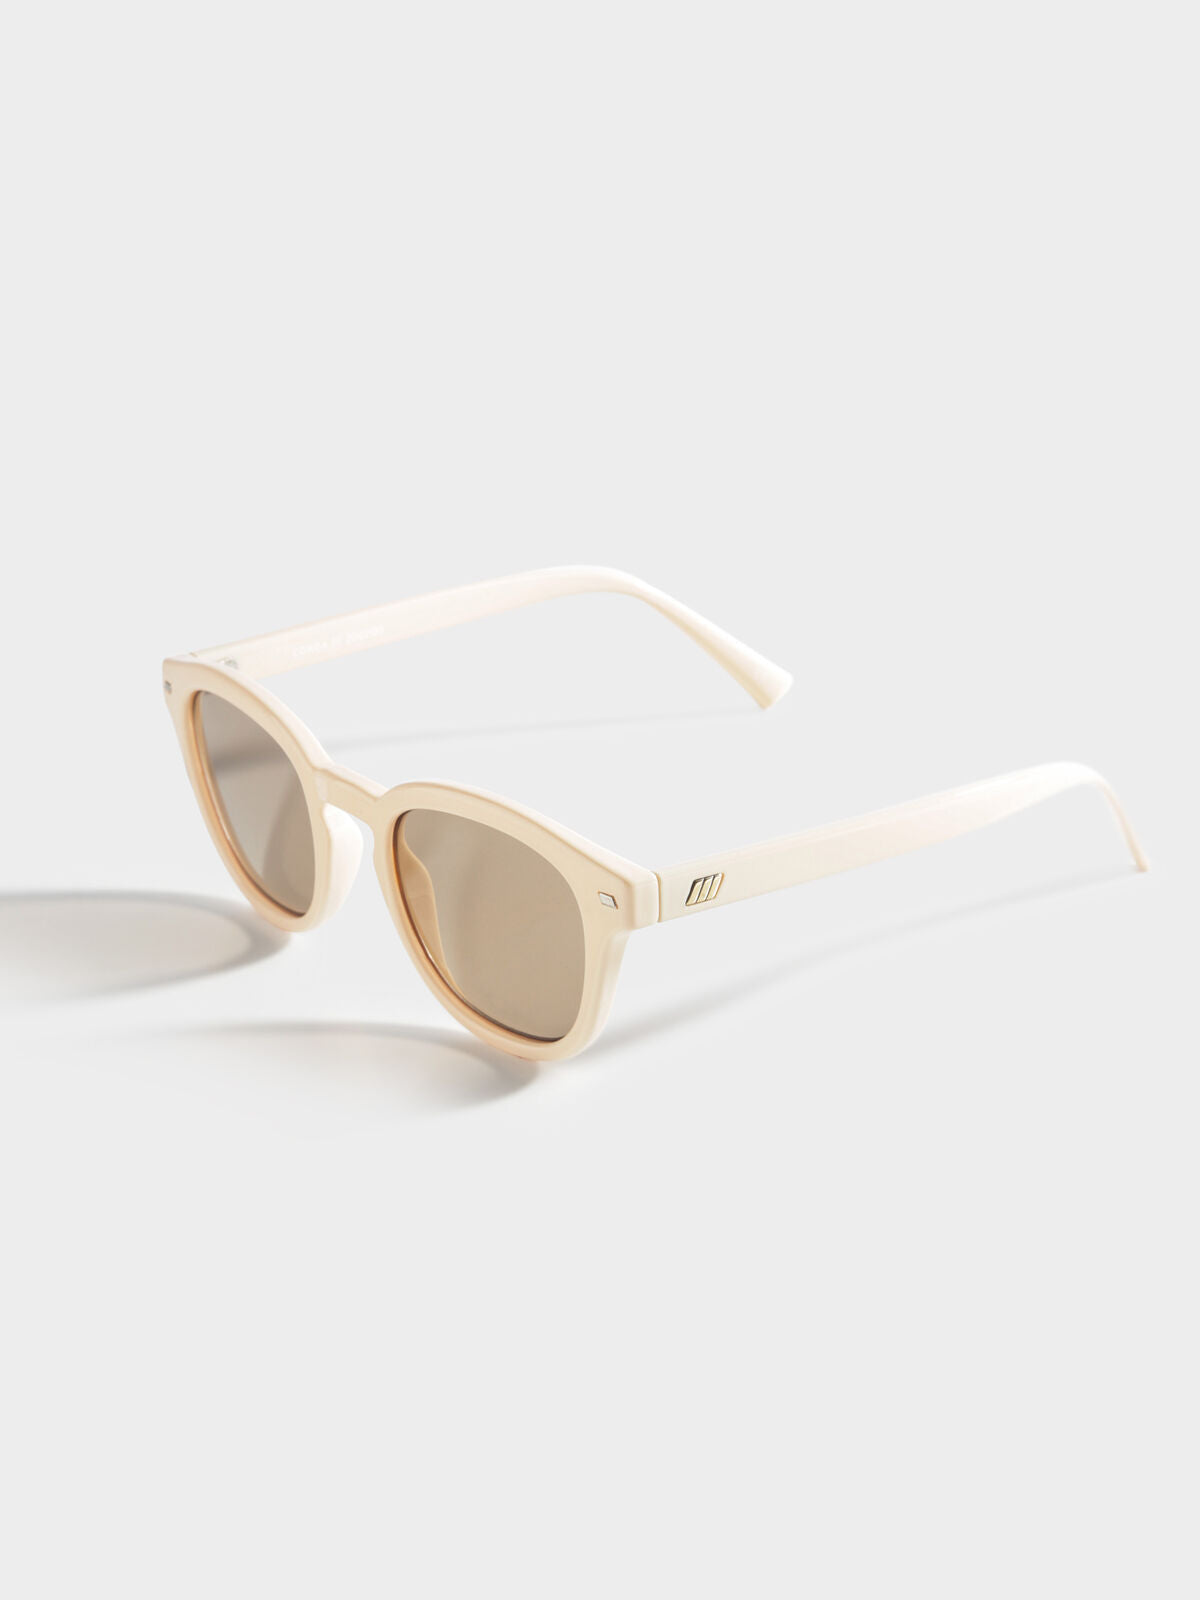 Conga Sunglasses in Ivory